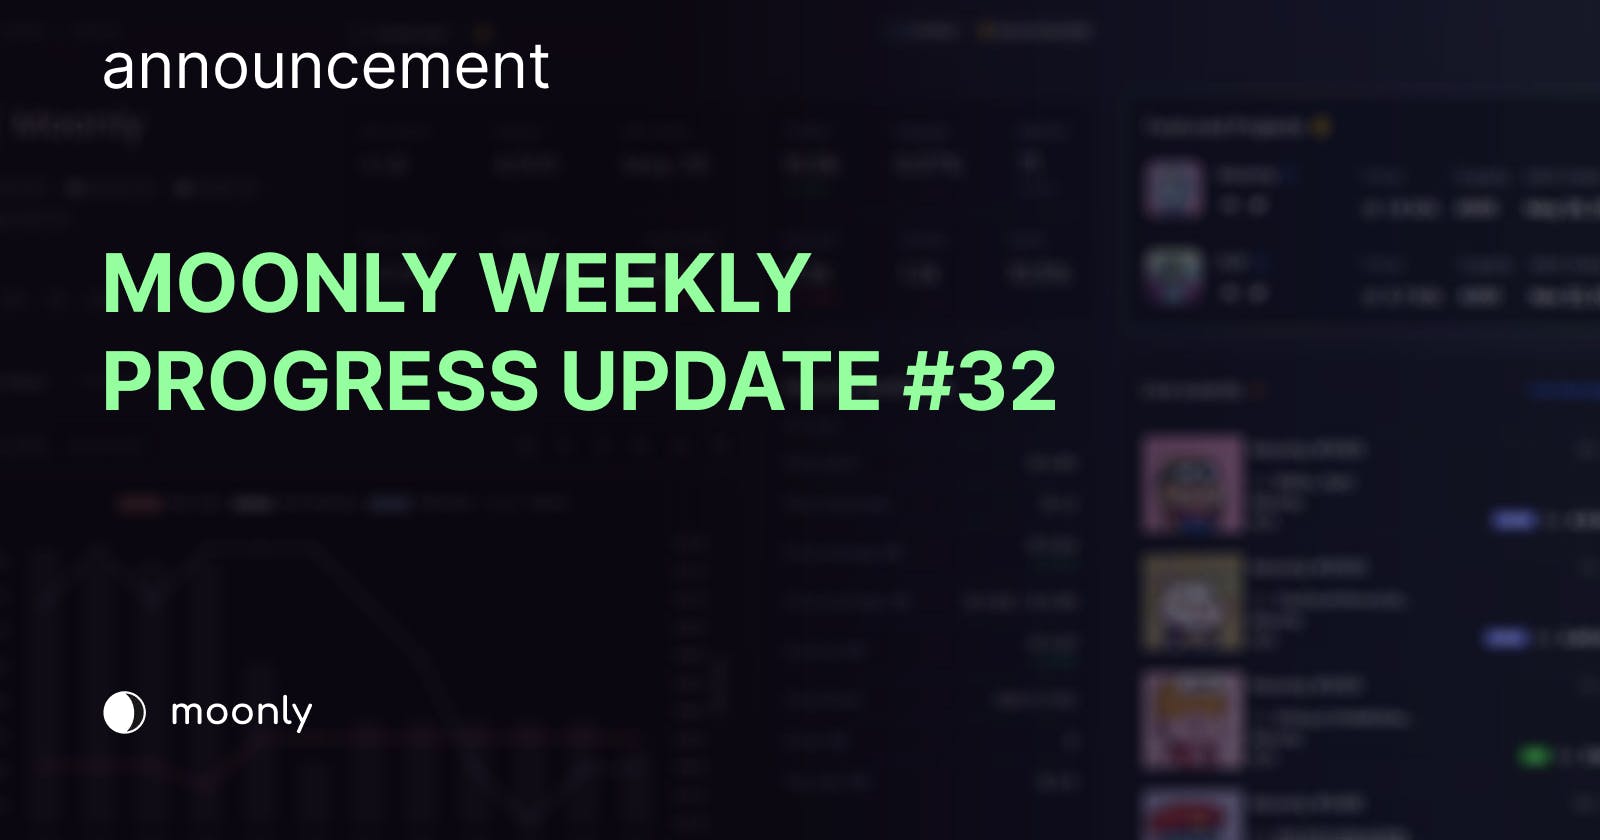 Moonly weekly progress update #32